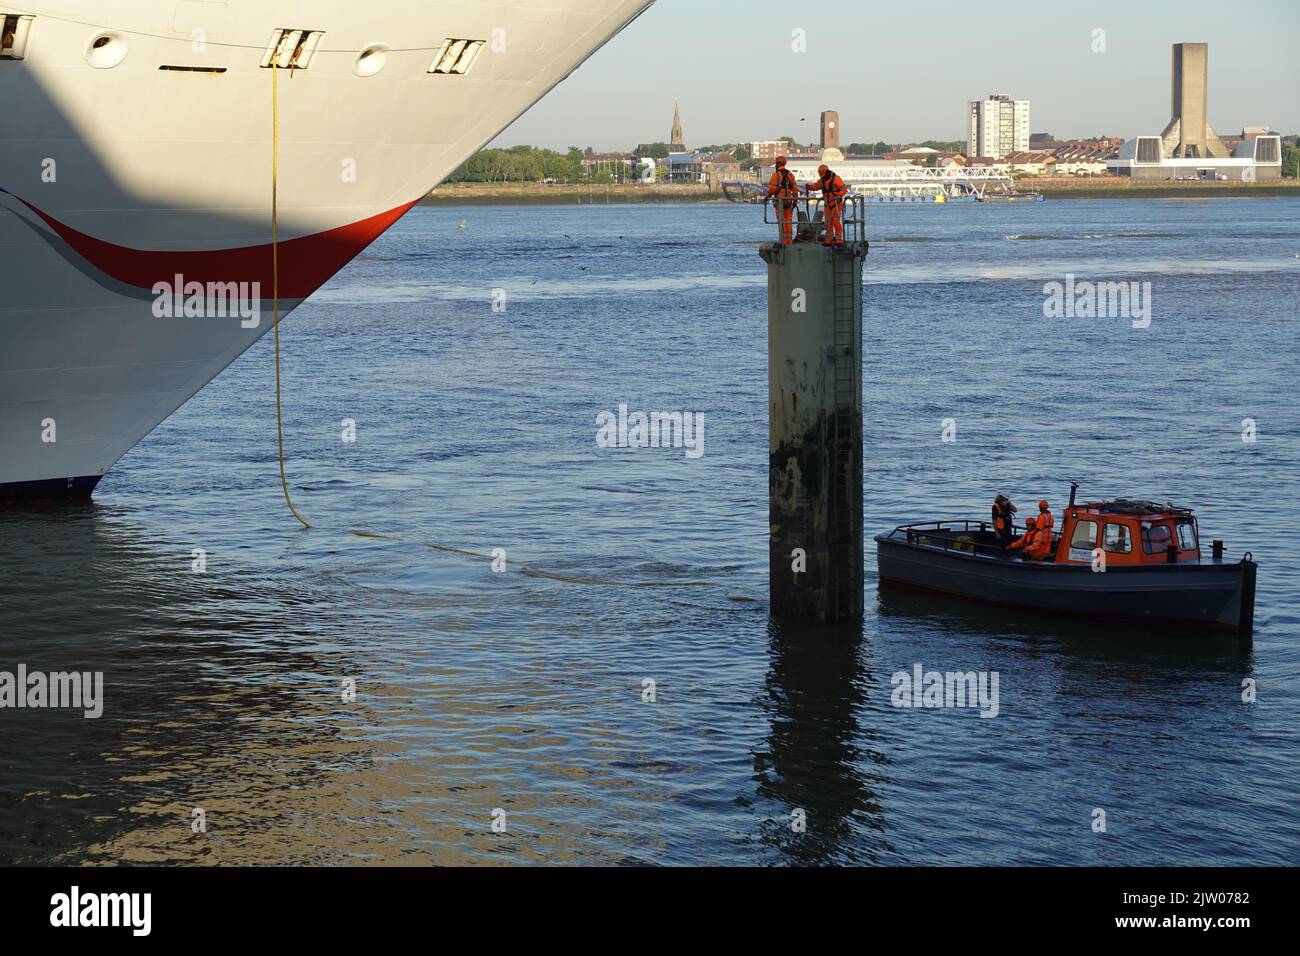 Norwegian Star Cruise liner, River Mersey, Liverpool, Merseyside, United Kingdom Stock Photo